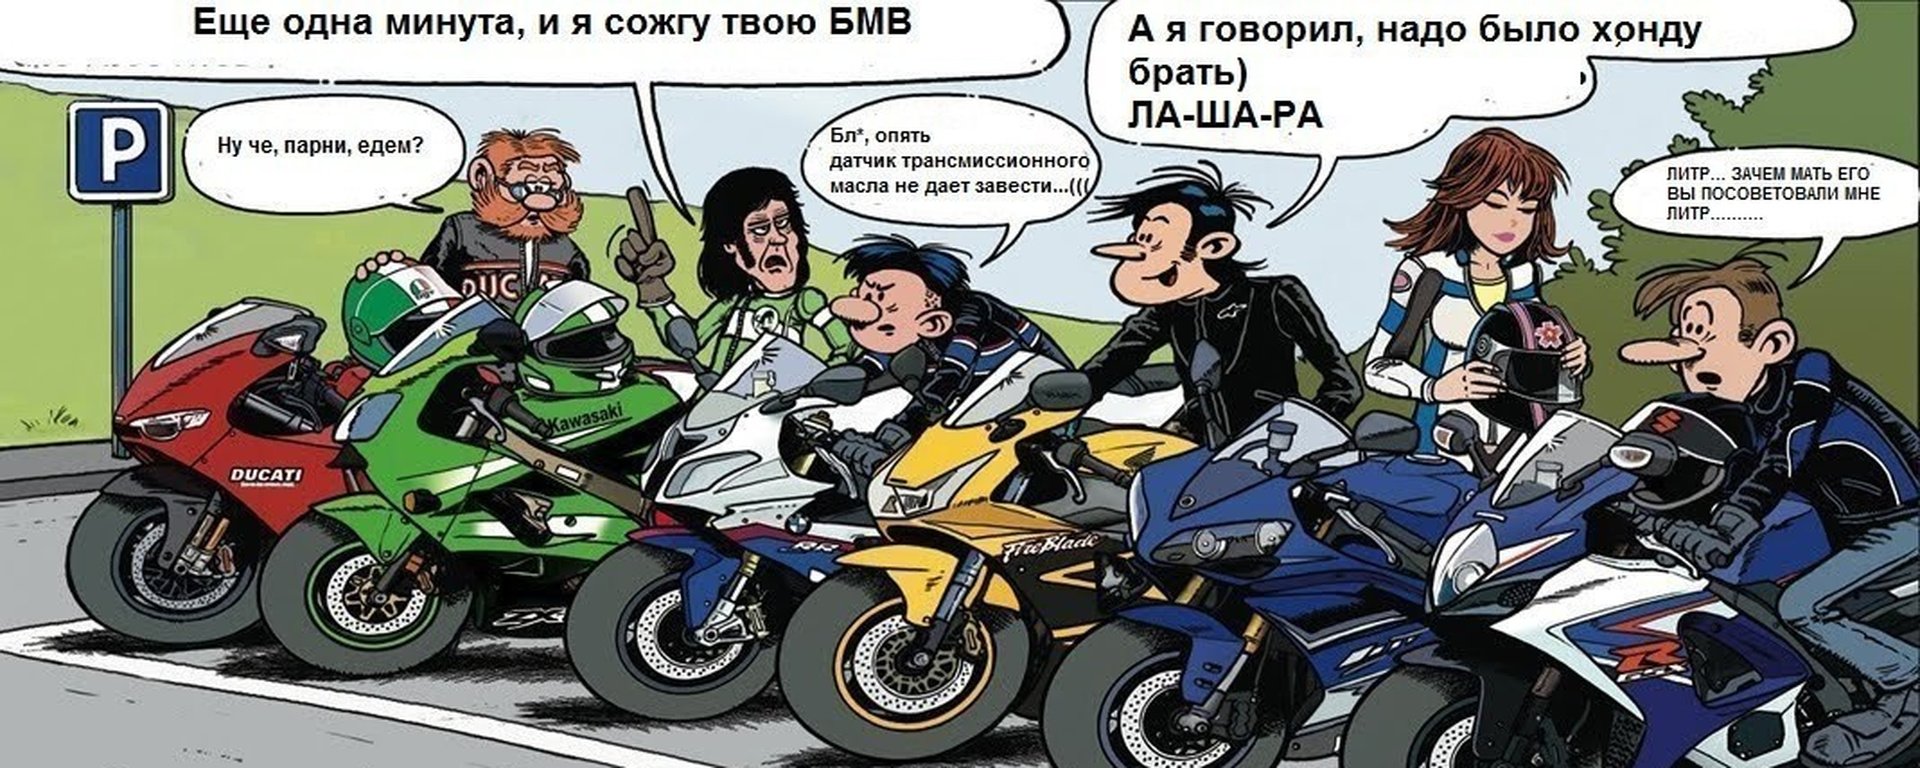 Давайте сядем на русском. Мото приколы. Анекдот про мотоцикл. Байкер карикатура. Юмор про мотоциклистов.